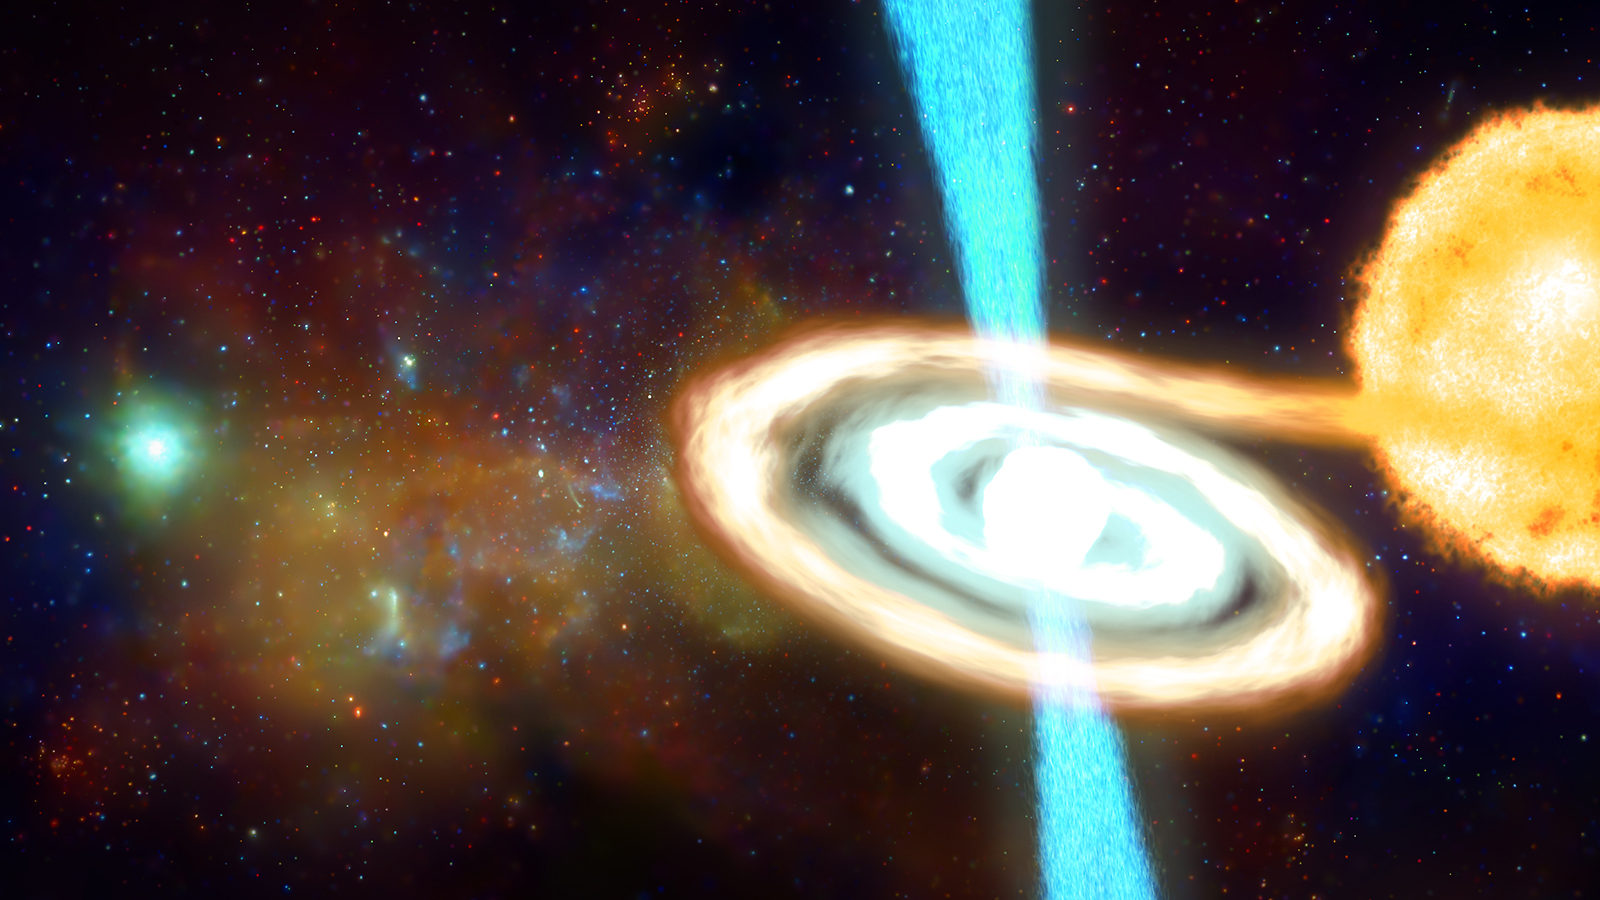 Artist's rendering of a spinning pulsar emitting gamma rays